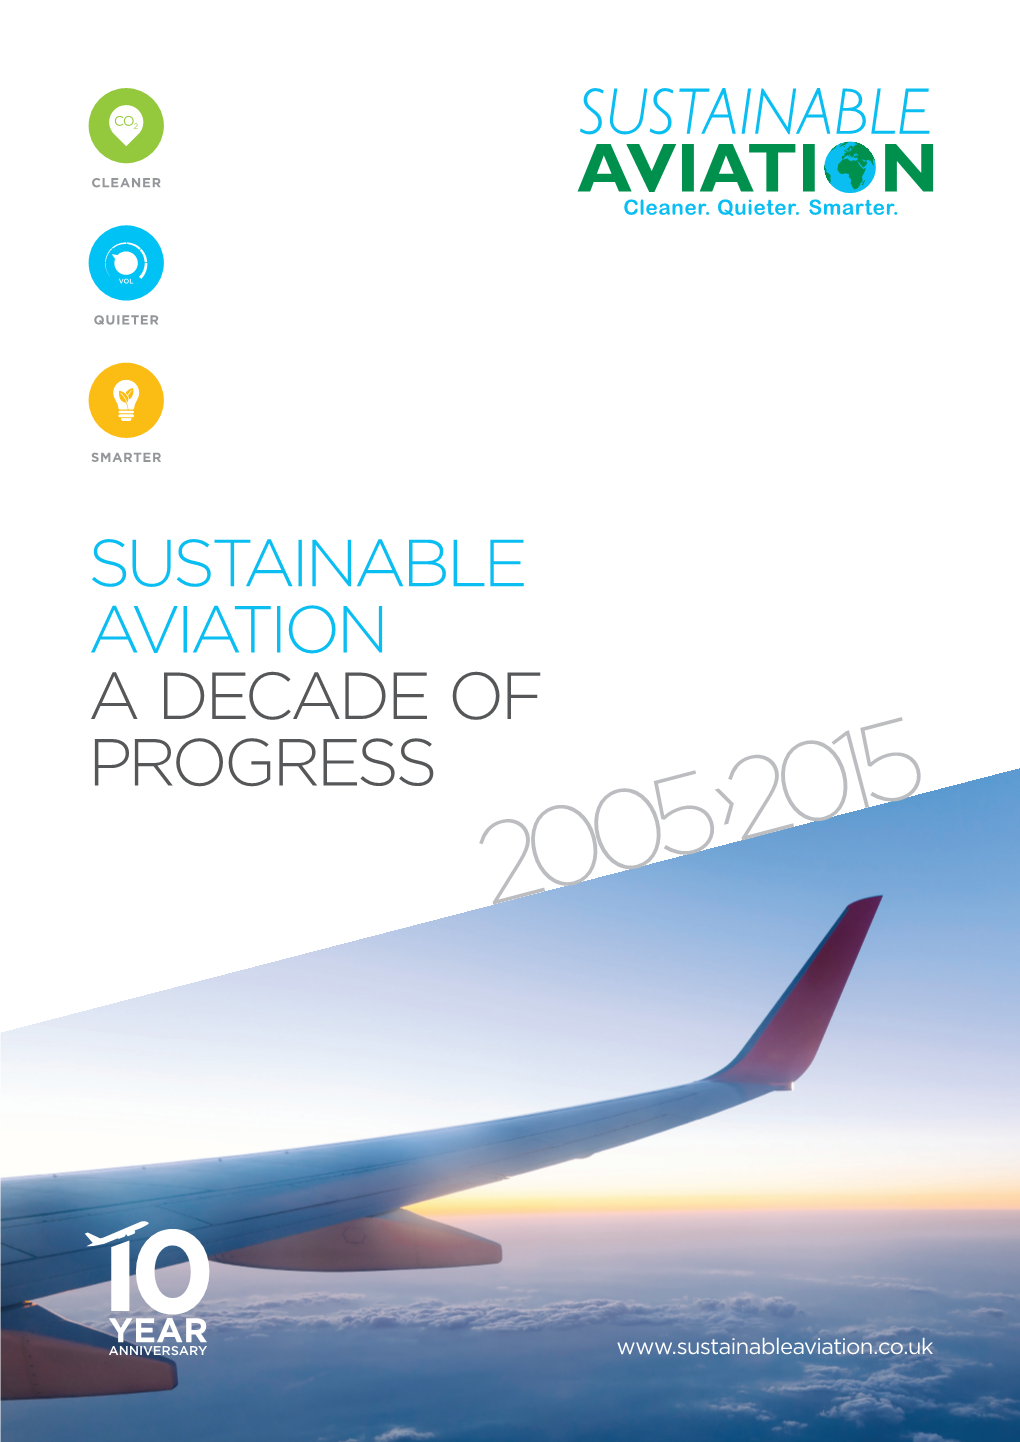 Sustainable Aviation – a Decade of Progress 2005-2015